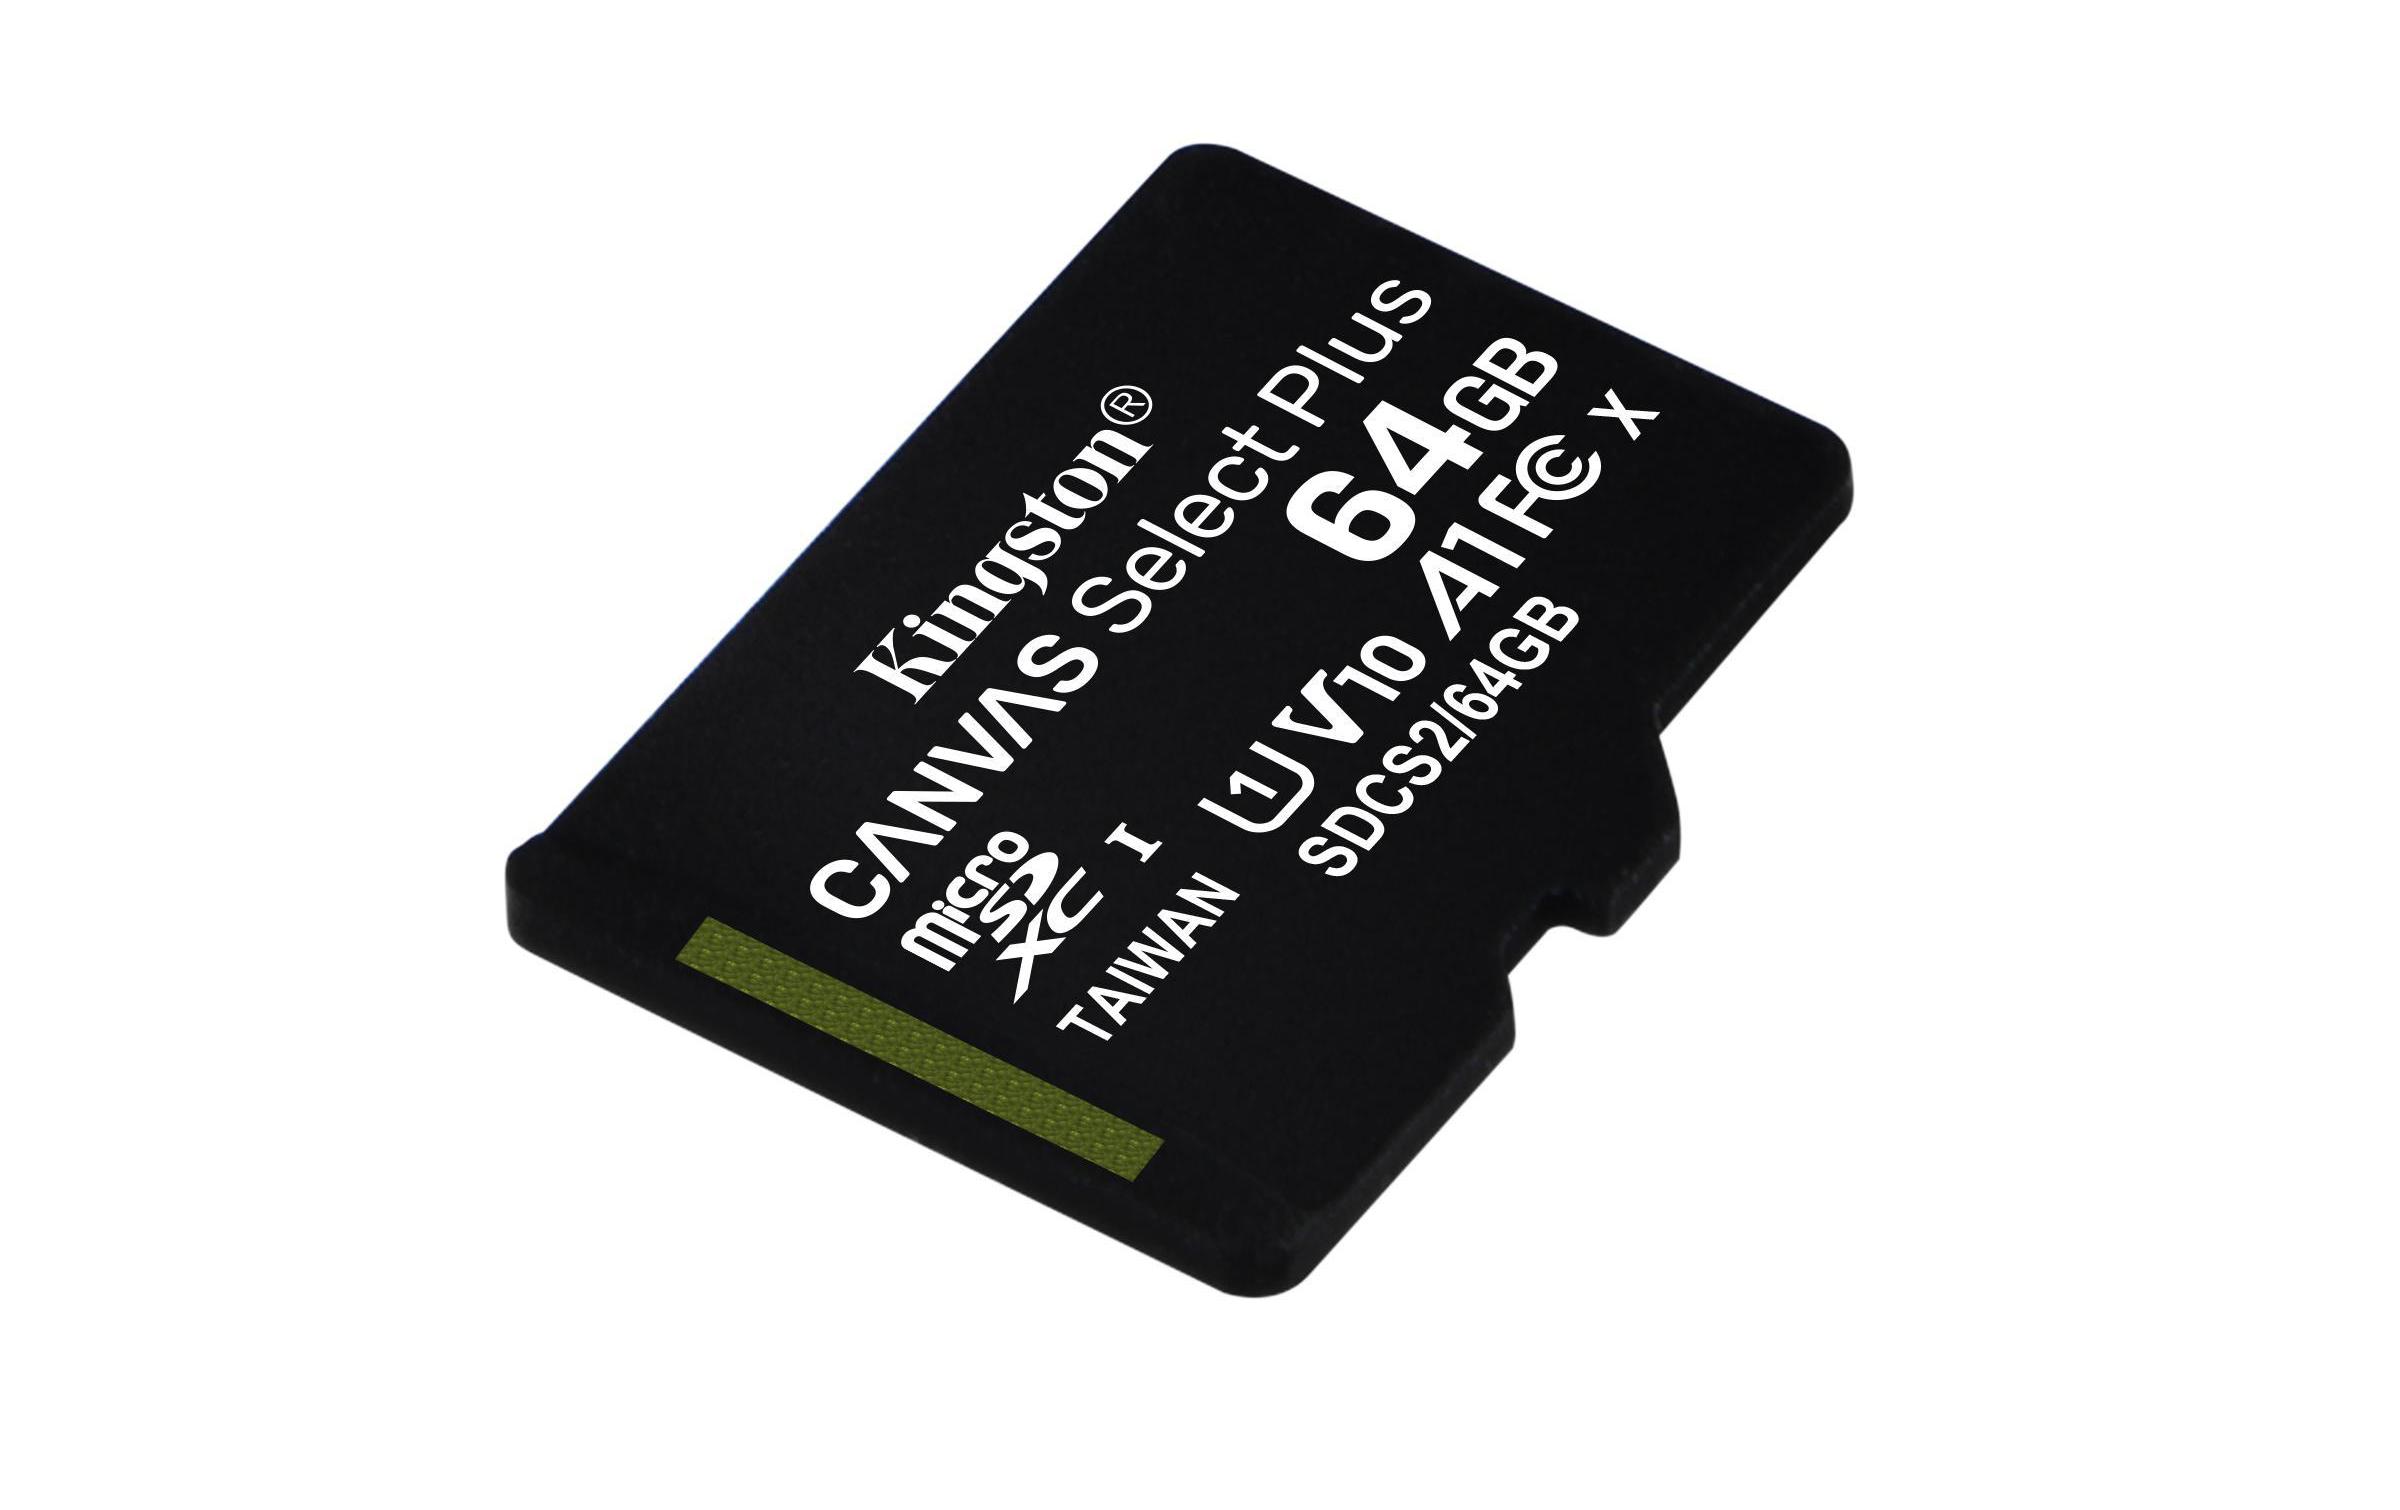 64 GB microSDXC-Card inkl. Adapter auf SD-Card, Kingston